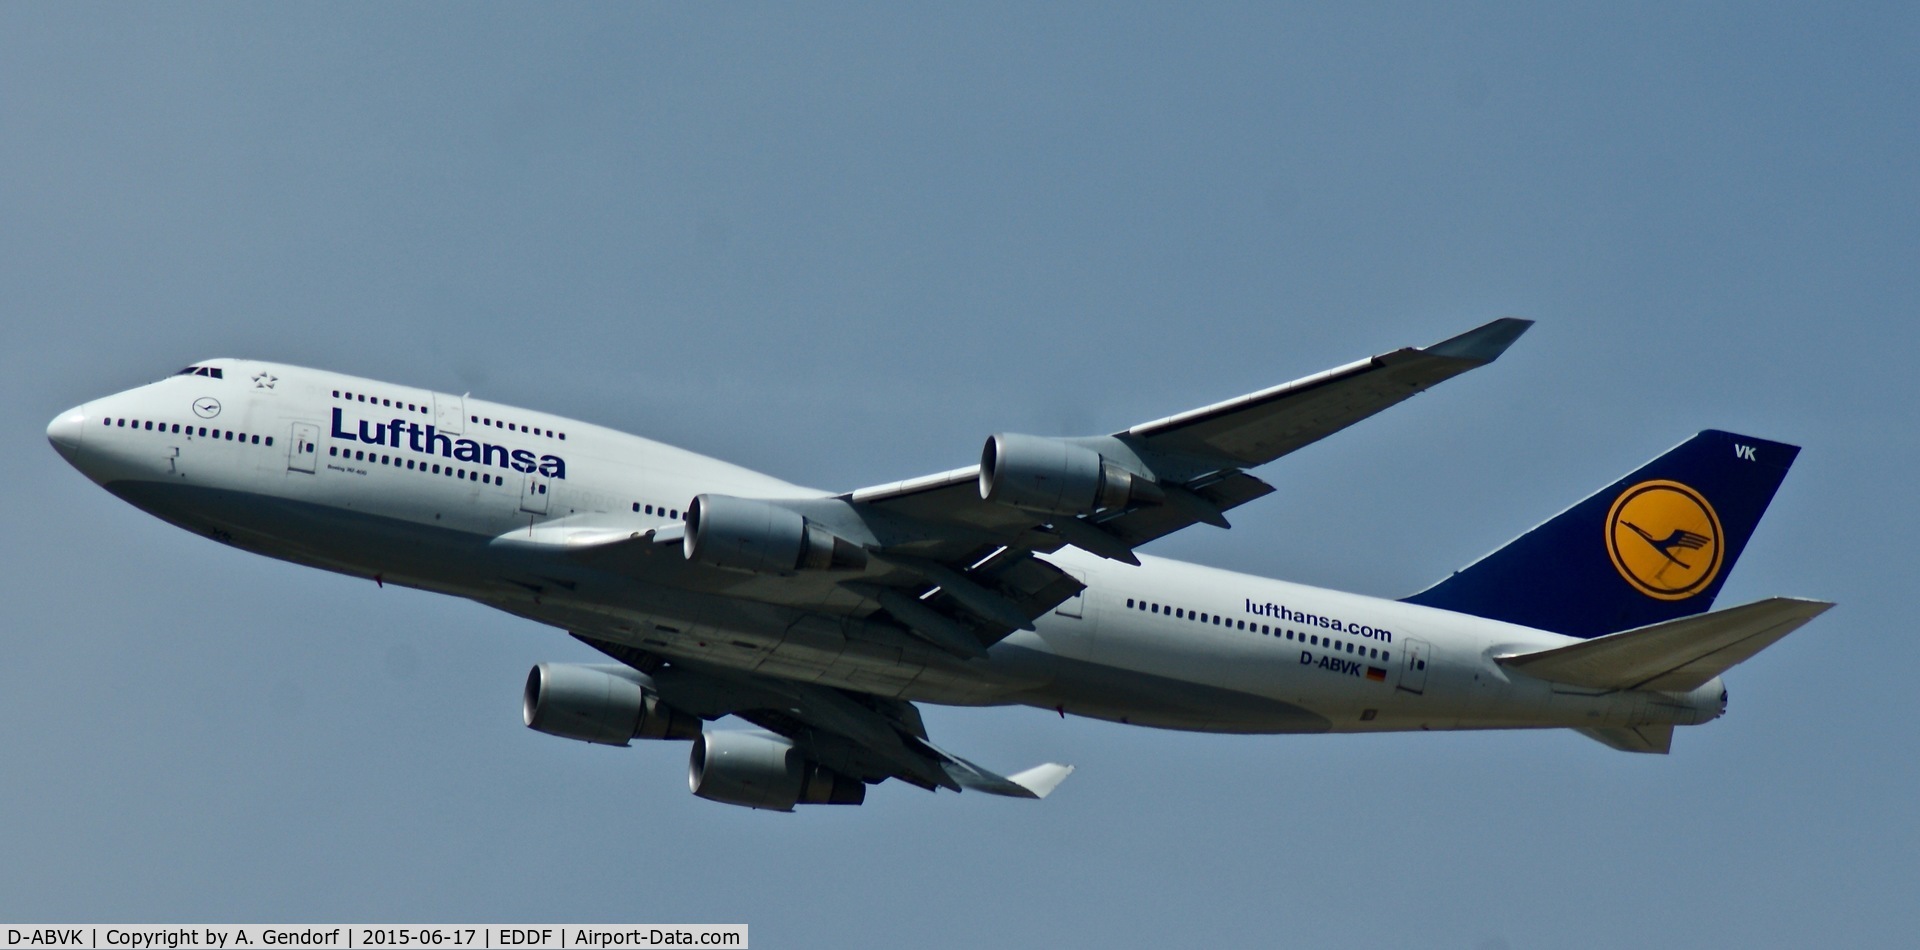 D-ABVK, 1991 Boeing 747-430 C/N 25046, Lufthansa, is here climbing out at Frankfurt Rhein/Main(EDDF)